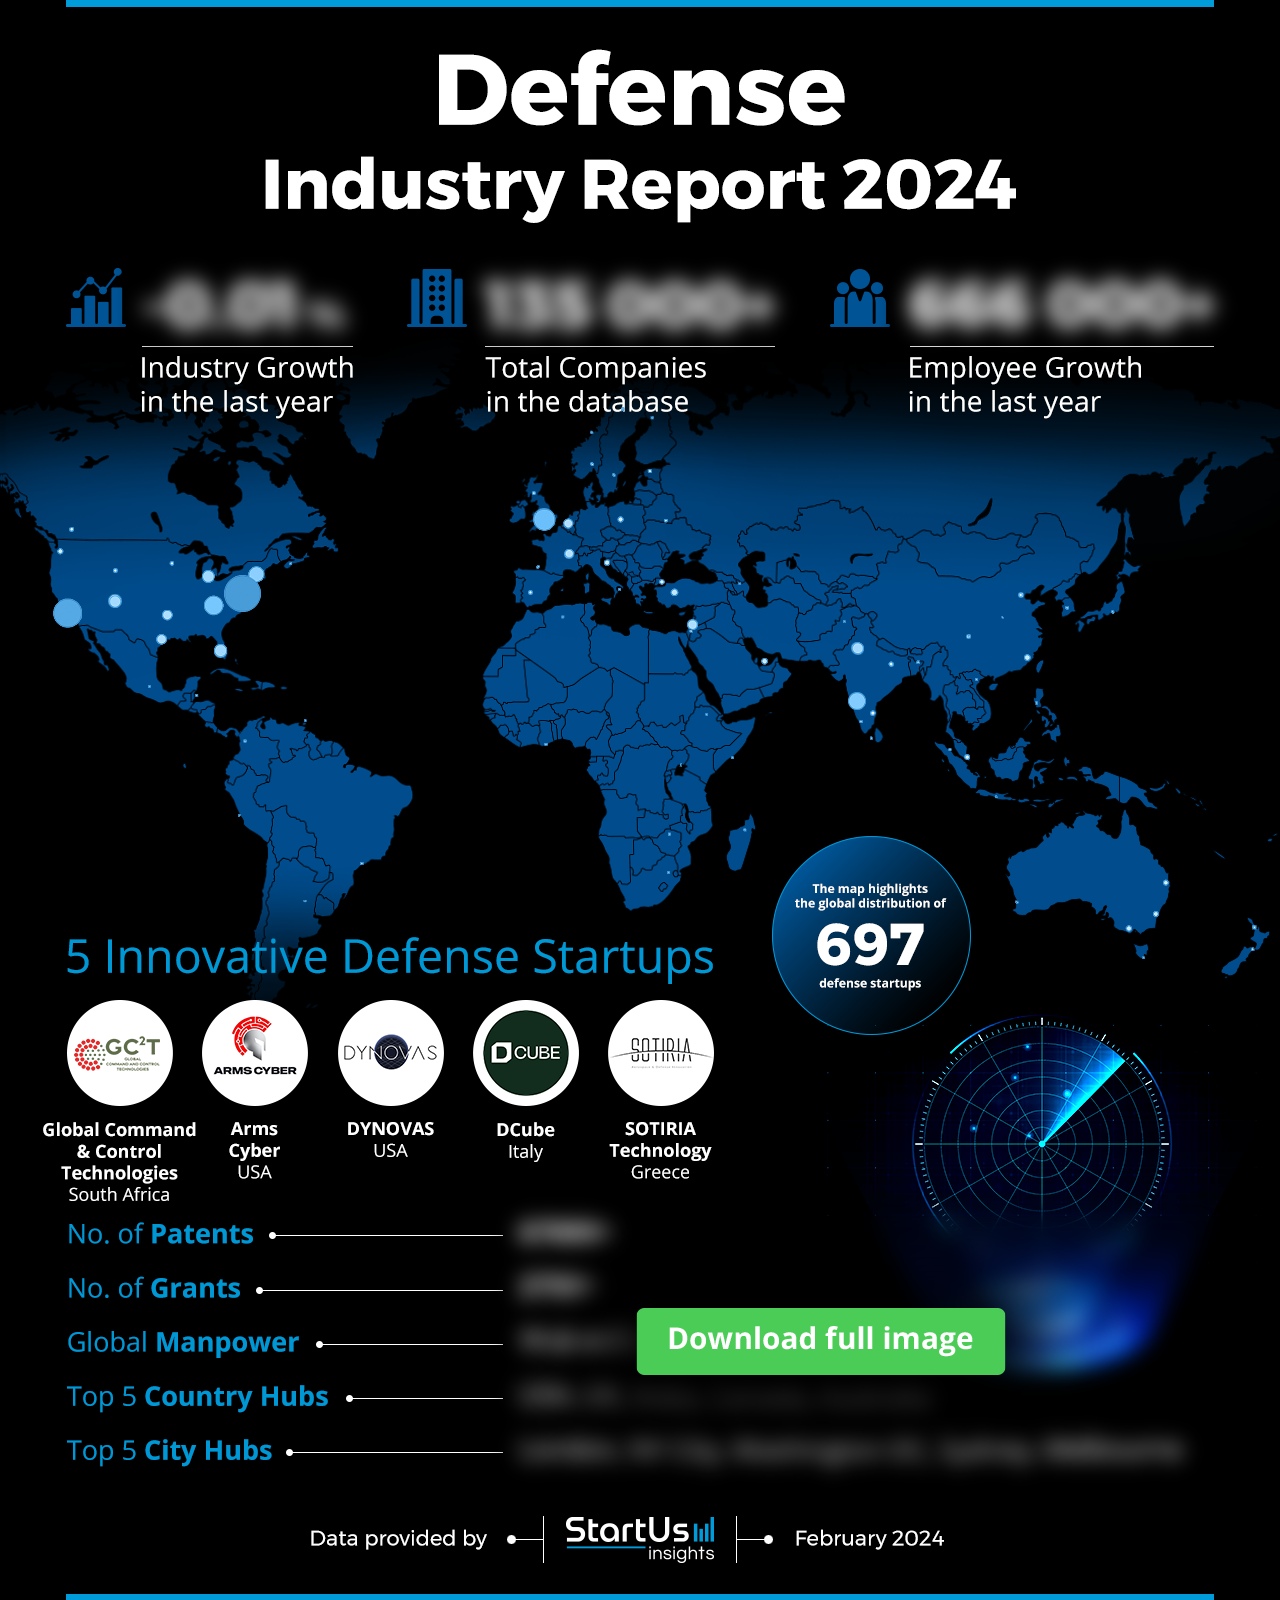 Defense Industry Report 2024 | StartUs Insights